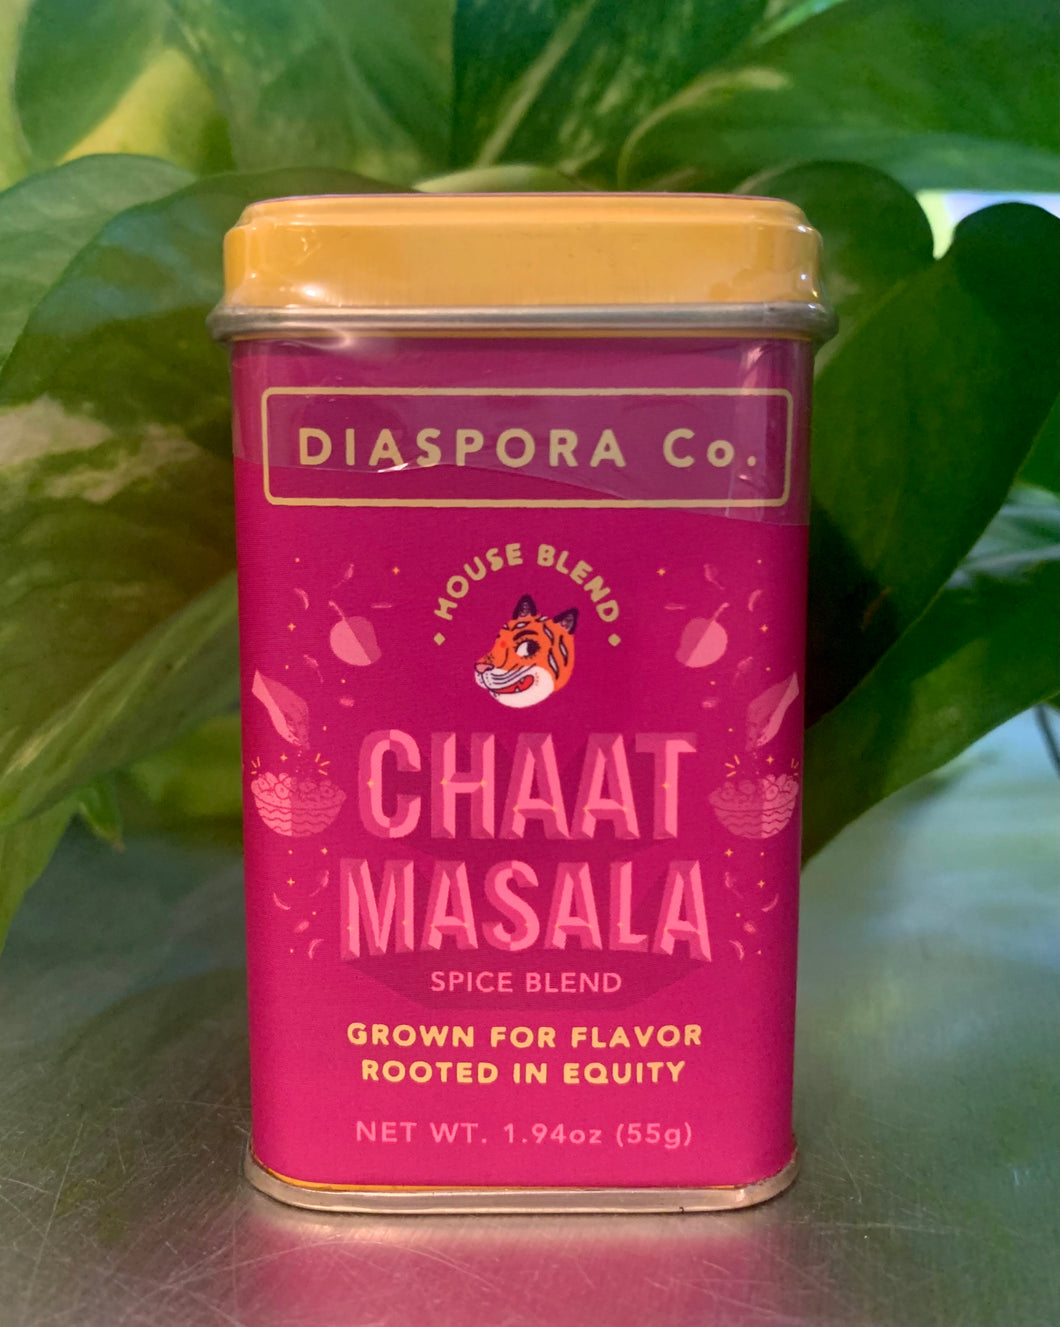 Diaspora Co. Chaat Masala